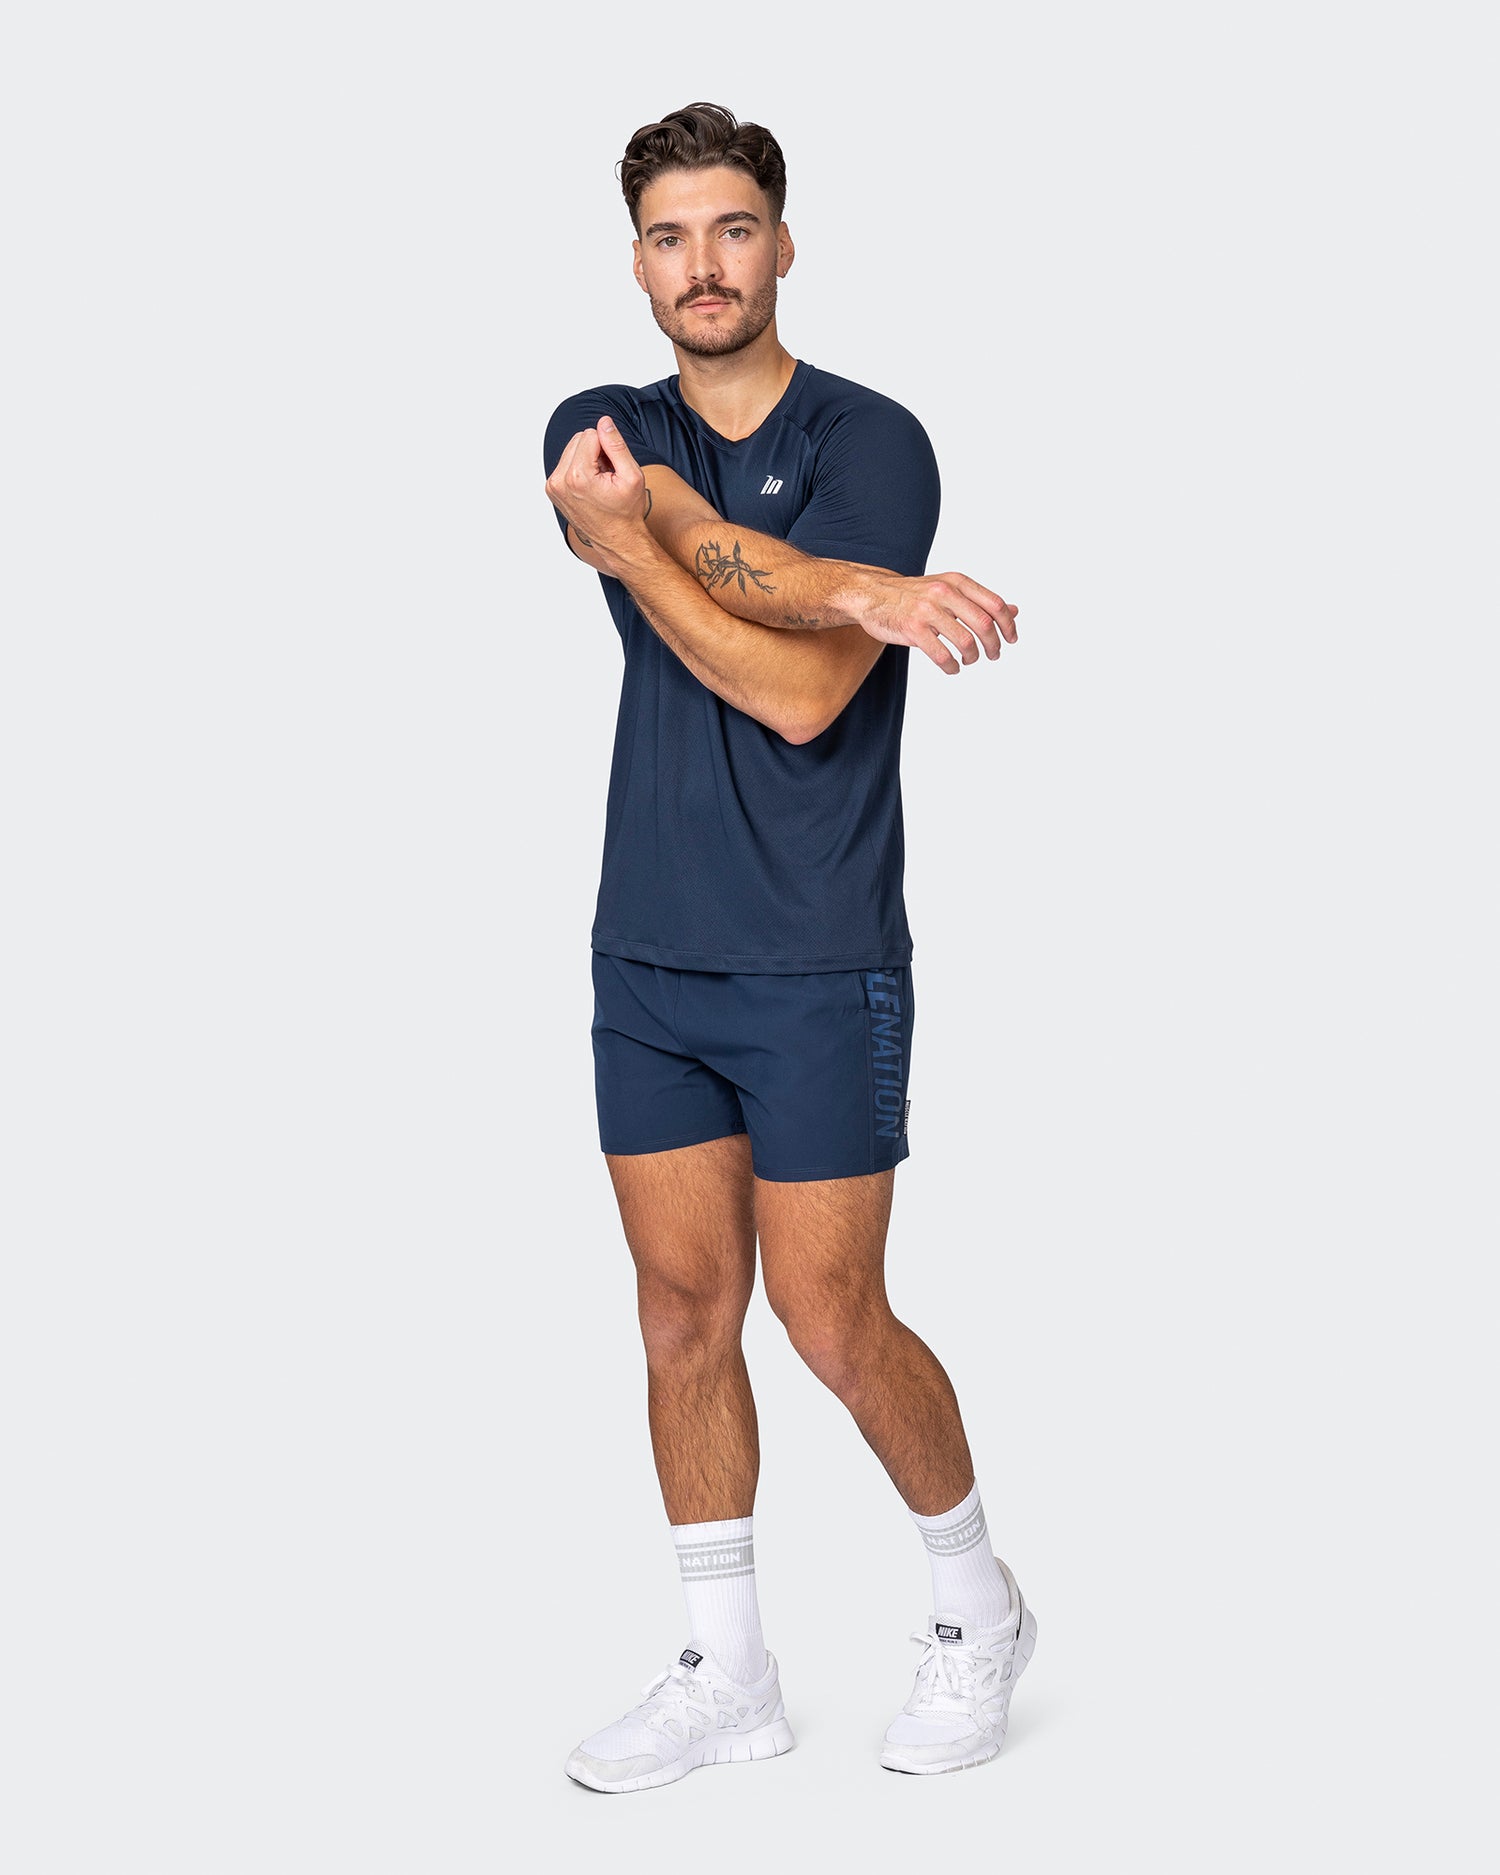 Function 4" Shorts - Navy